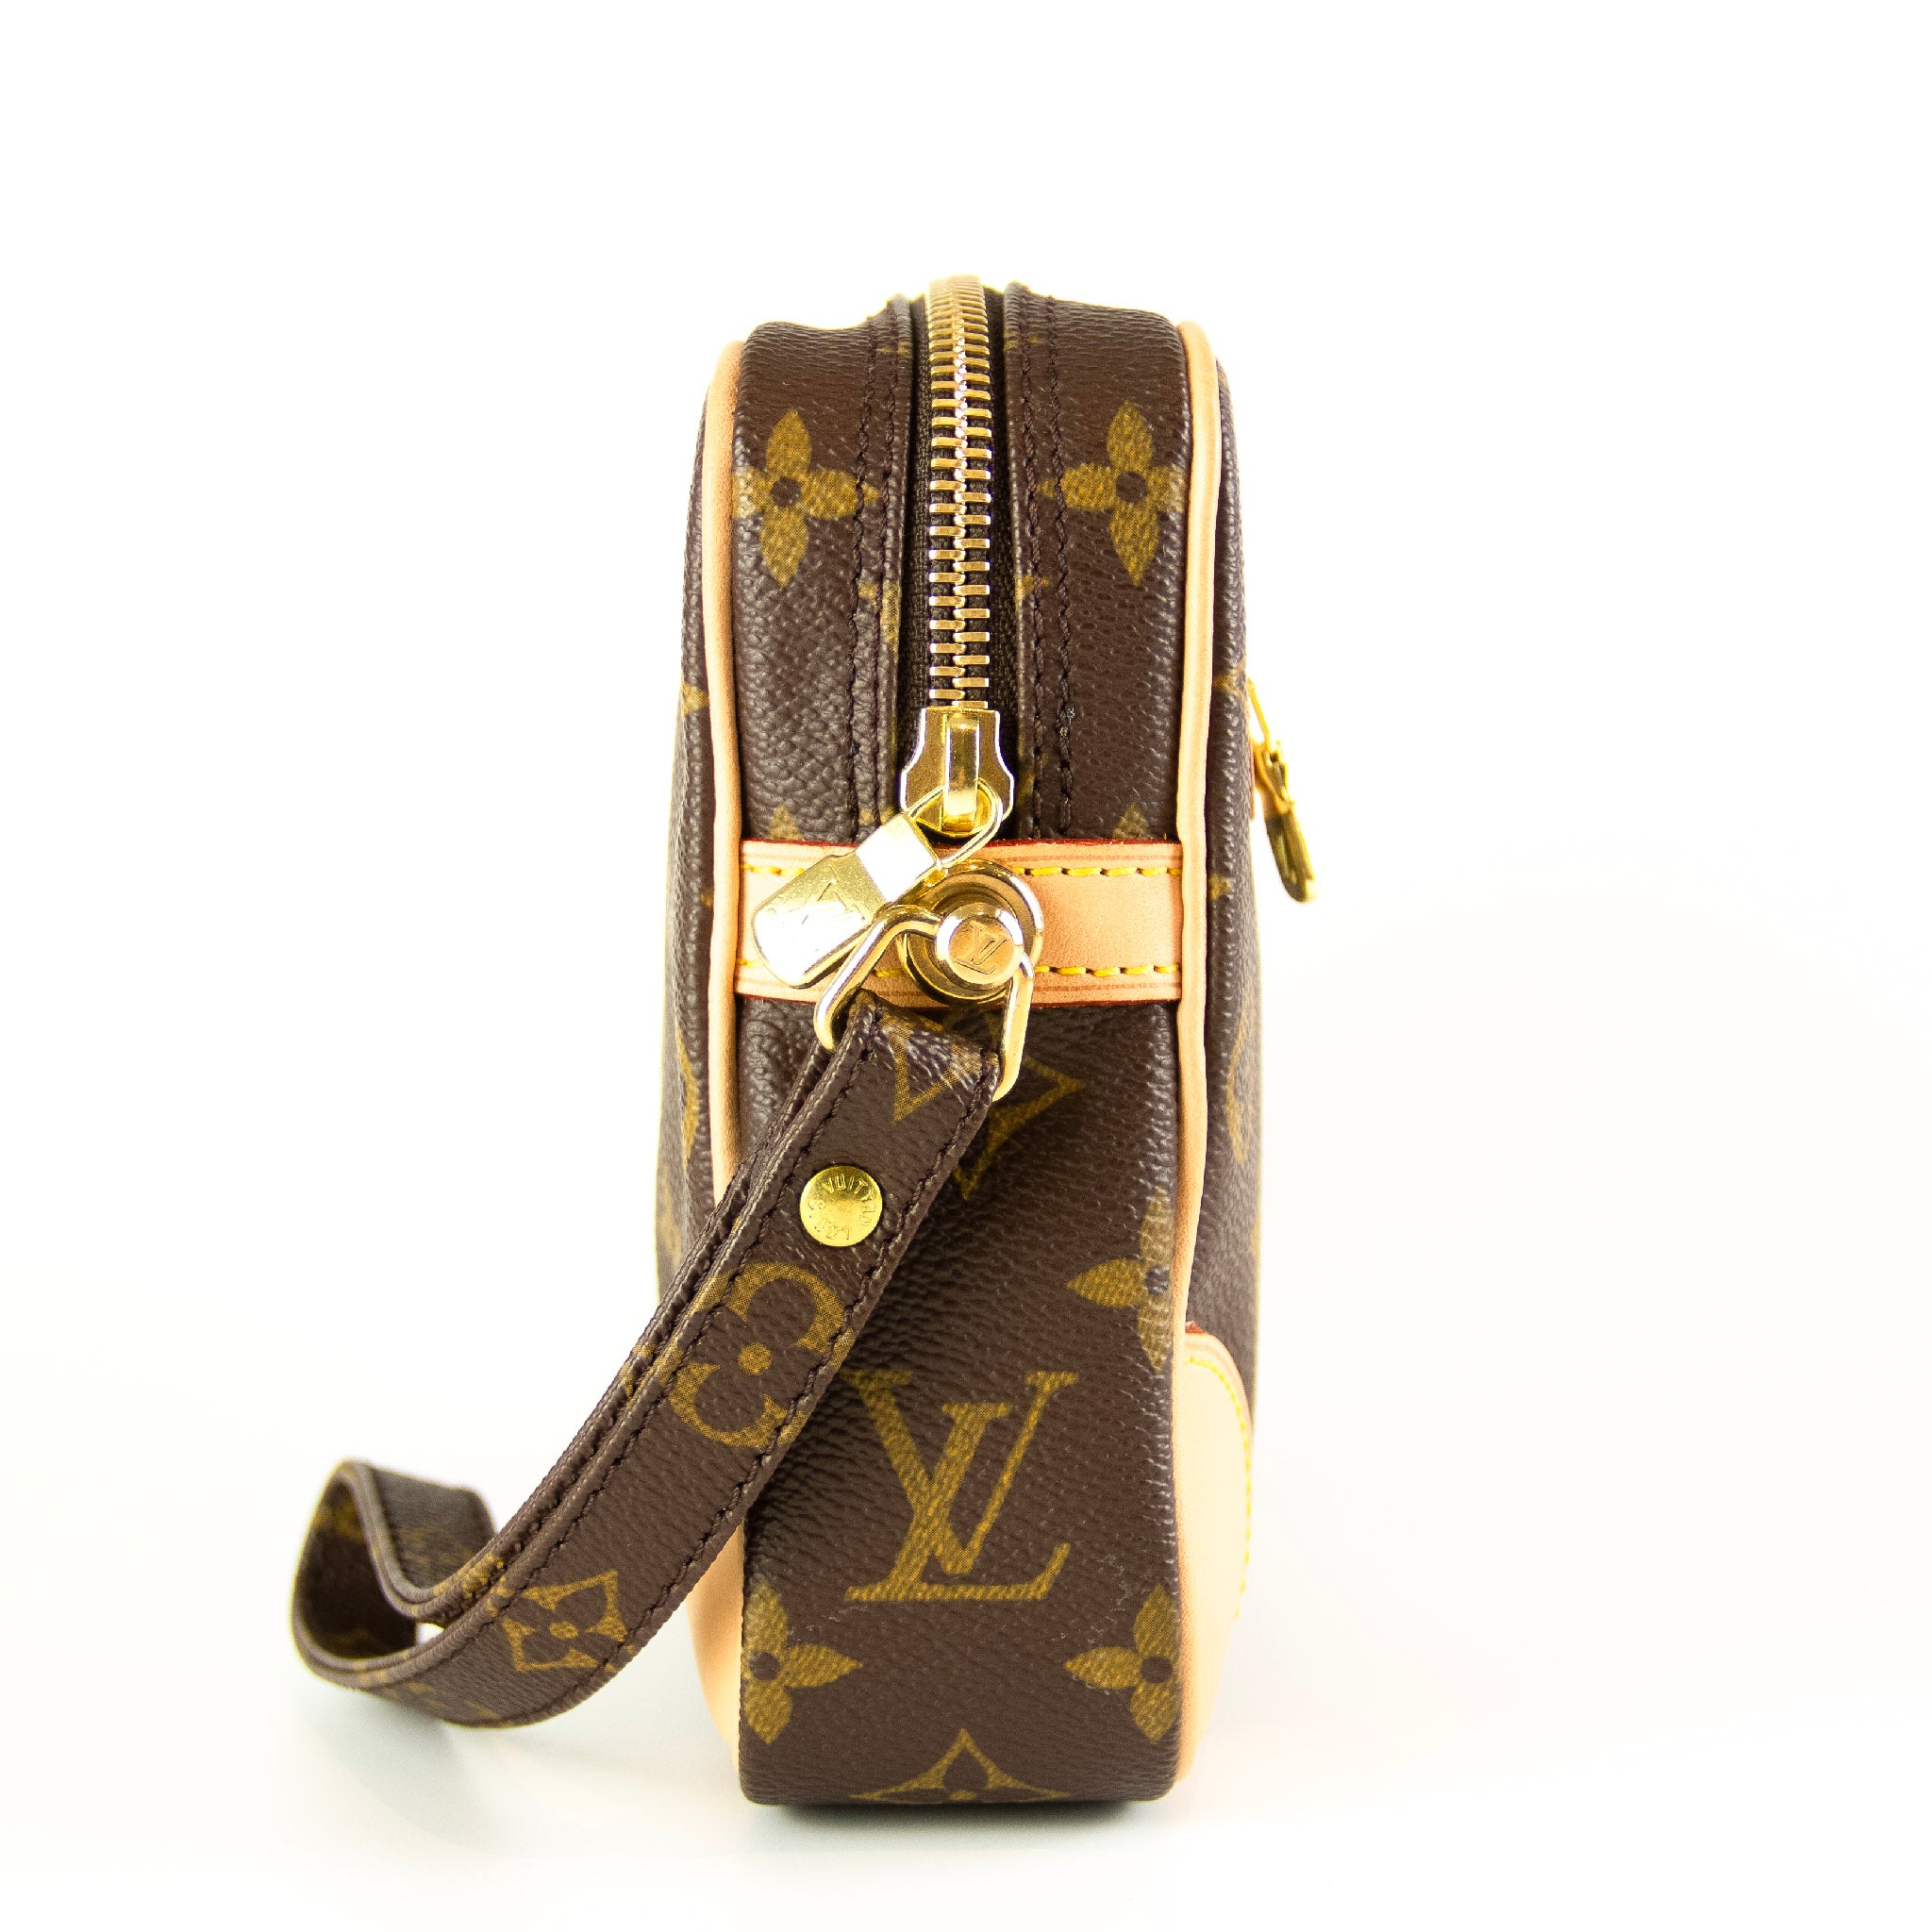 Louis Vuitton - Pochette Marly Dragonne - Clutch bag - Catawiki